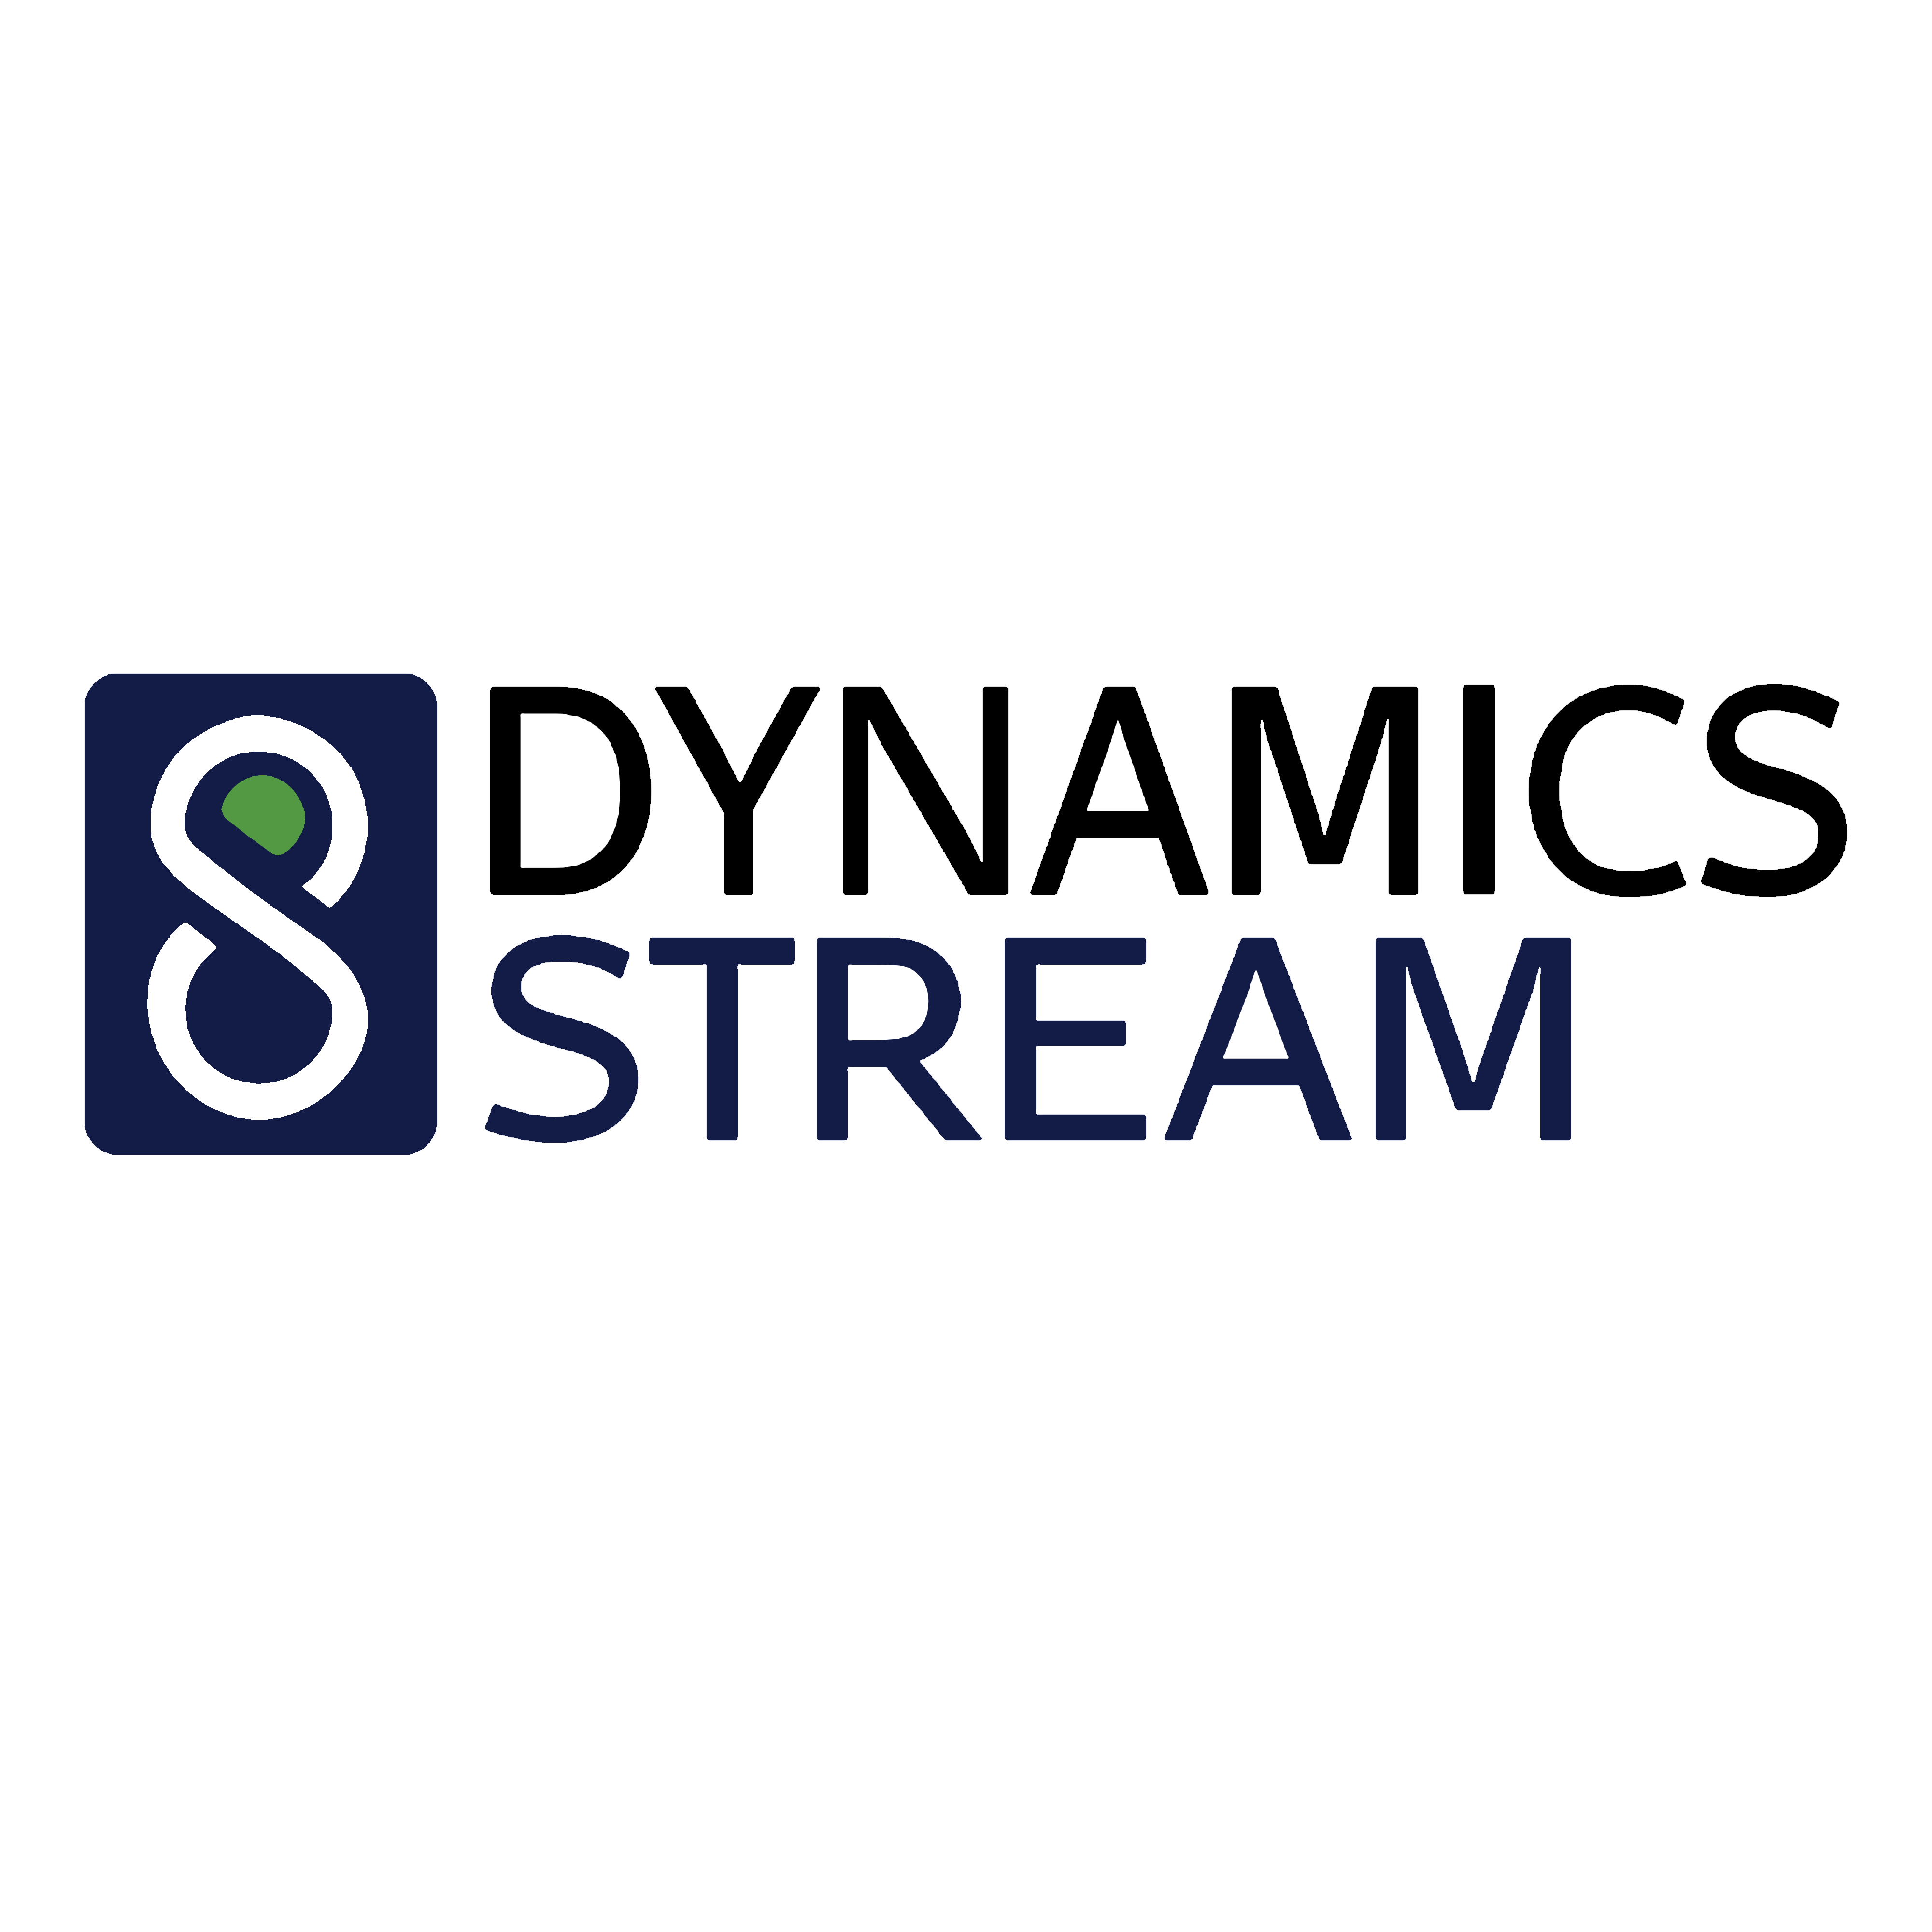 Dynamics Stream